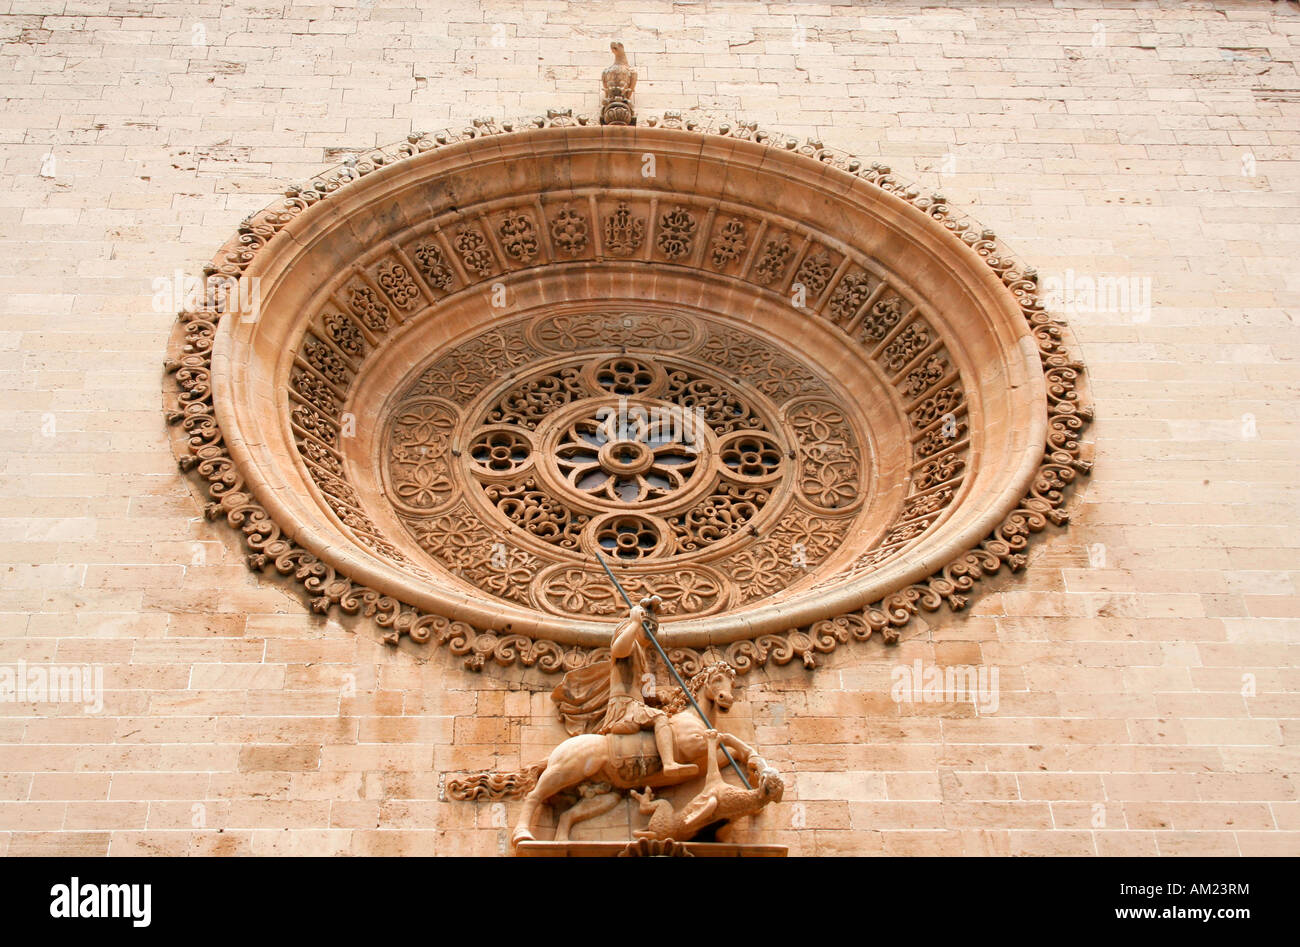 Rose window of San Francesc church, Palma, Mallorca, Spain Stock Photo